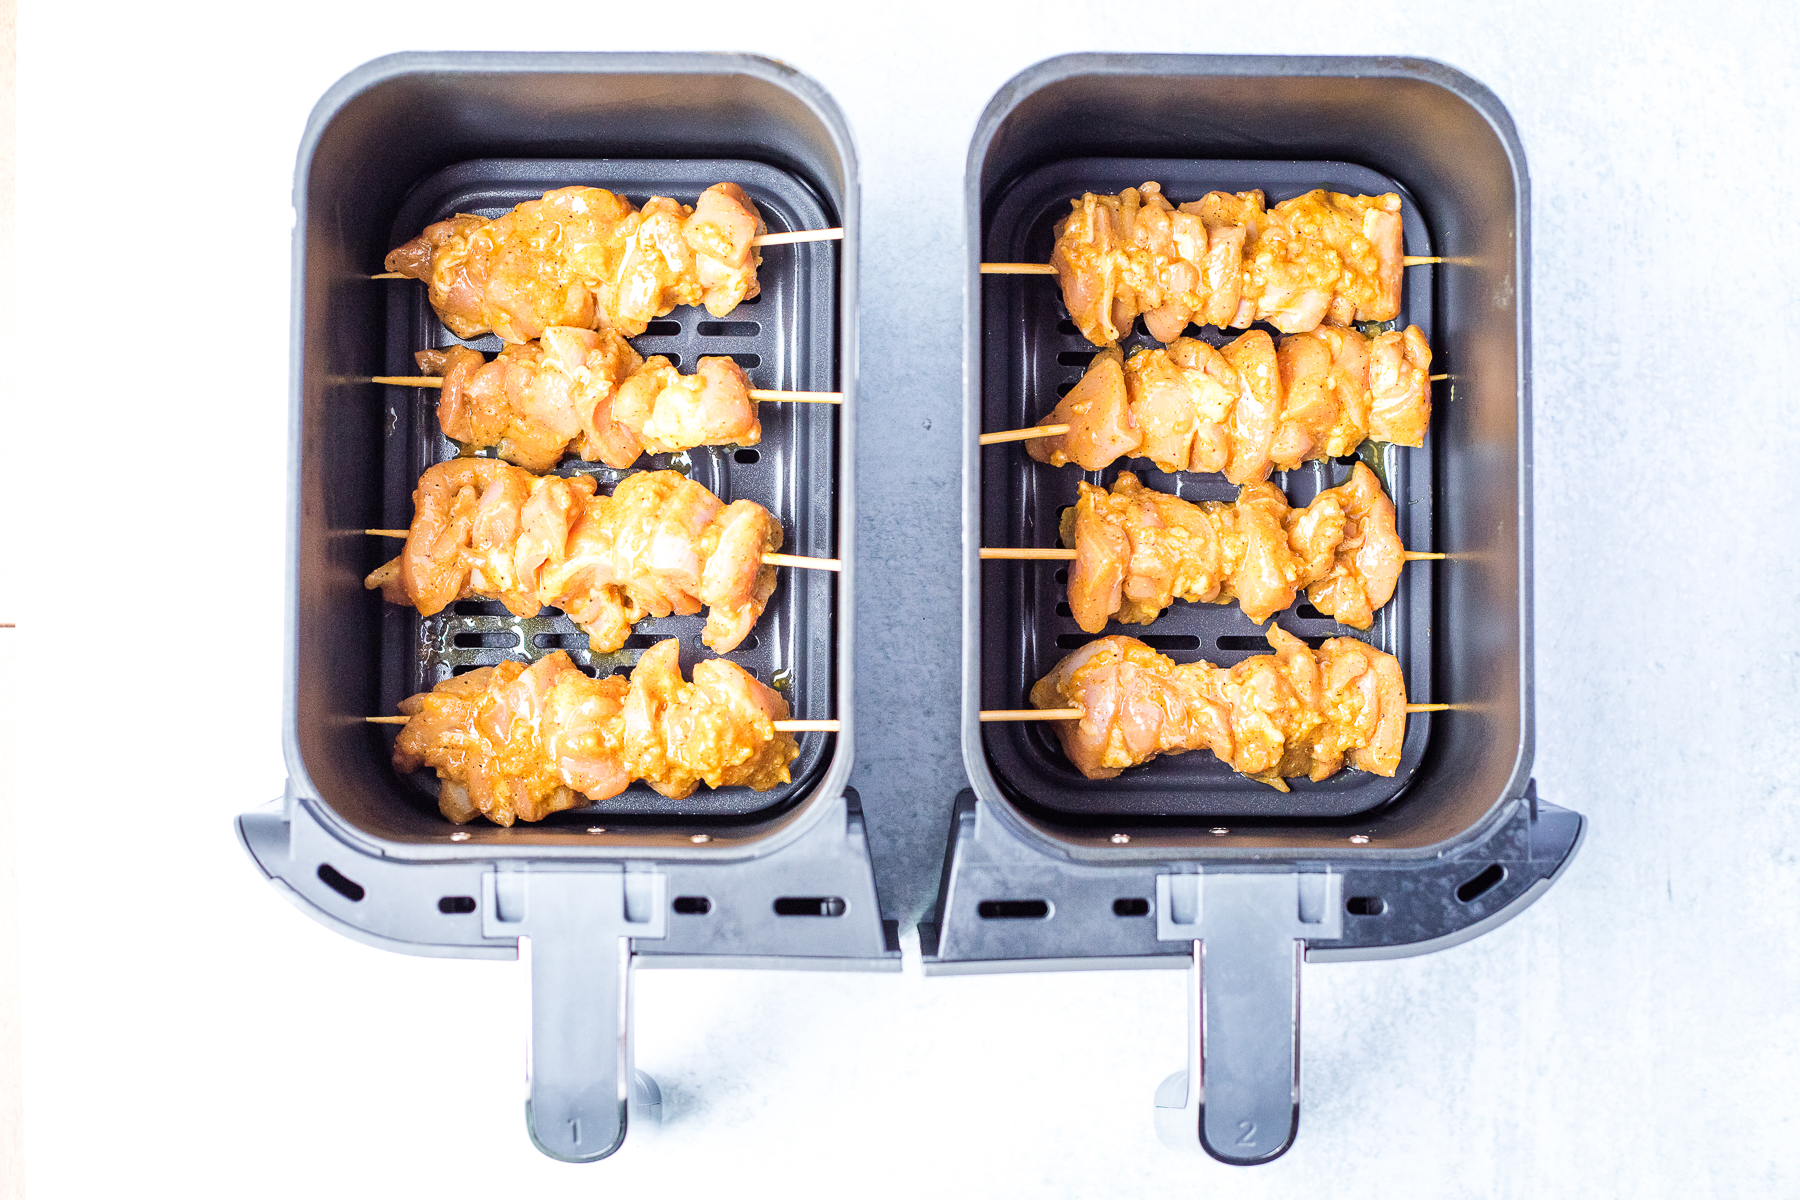 uncooked chicken kebobs arranged in an air fryer